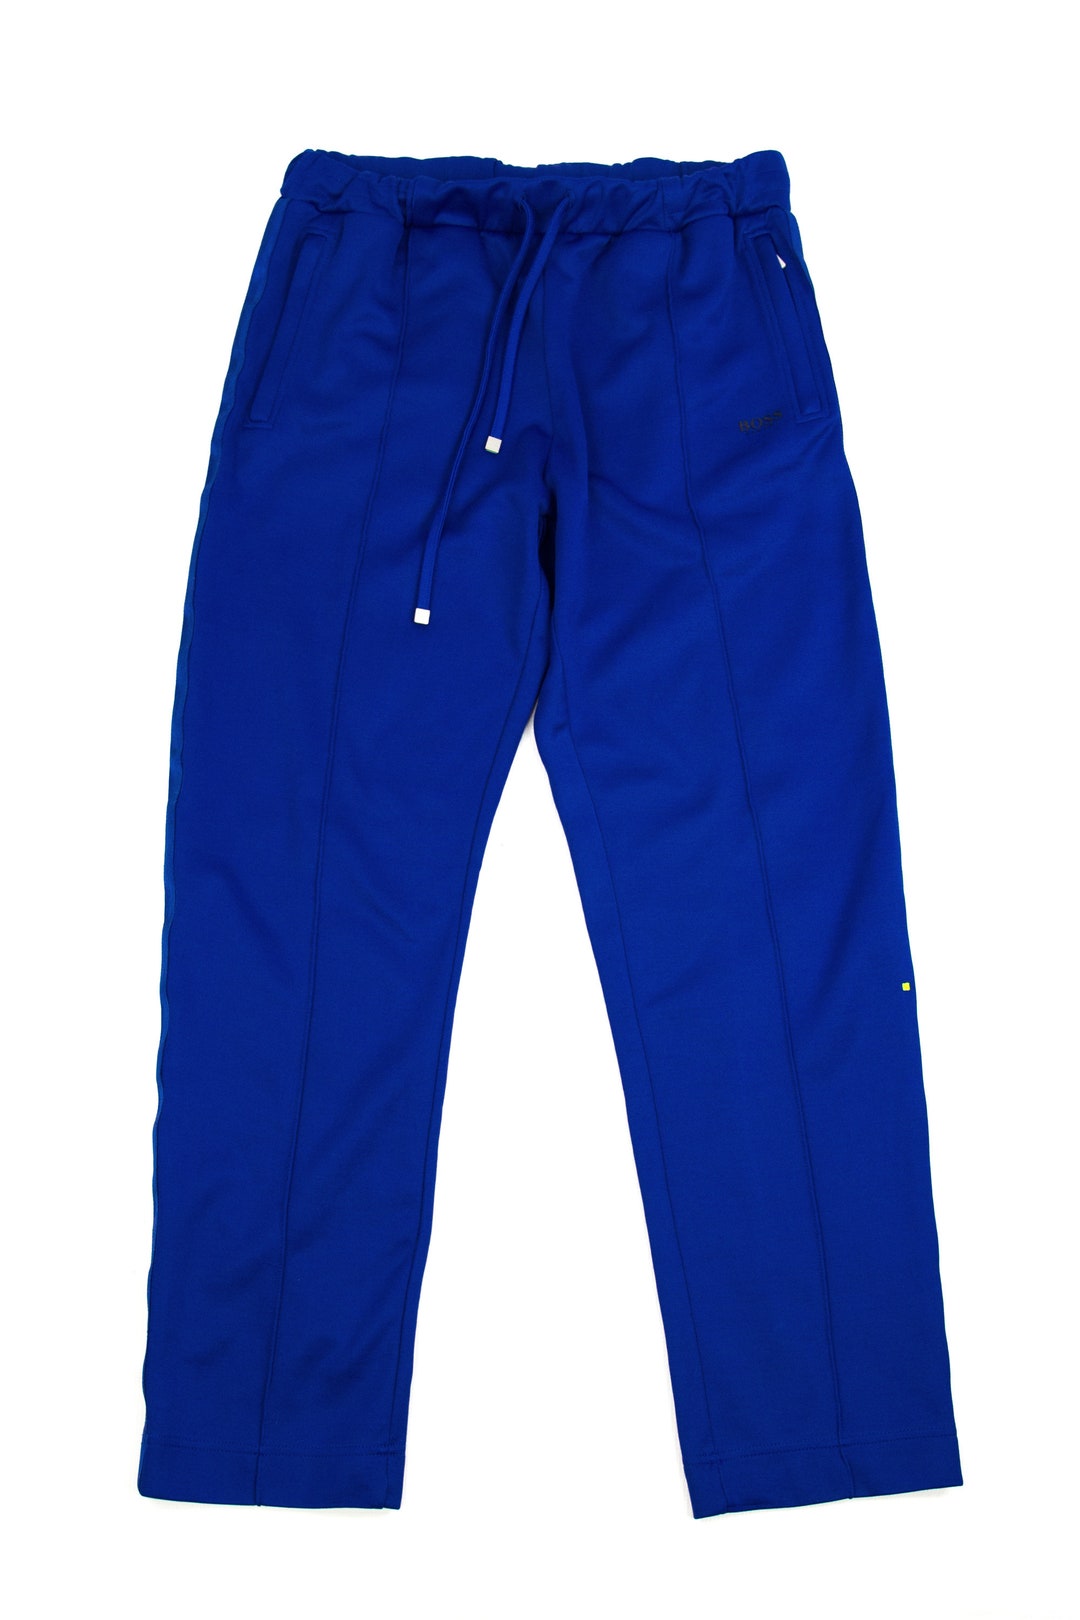 Blue Track Pants Mens Track Trousers Sport Pants Athletic Pants